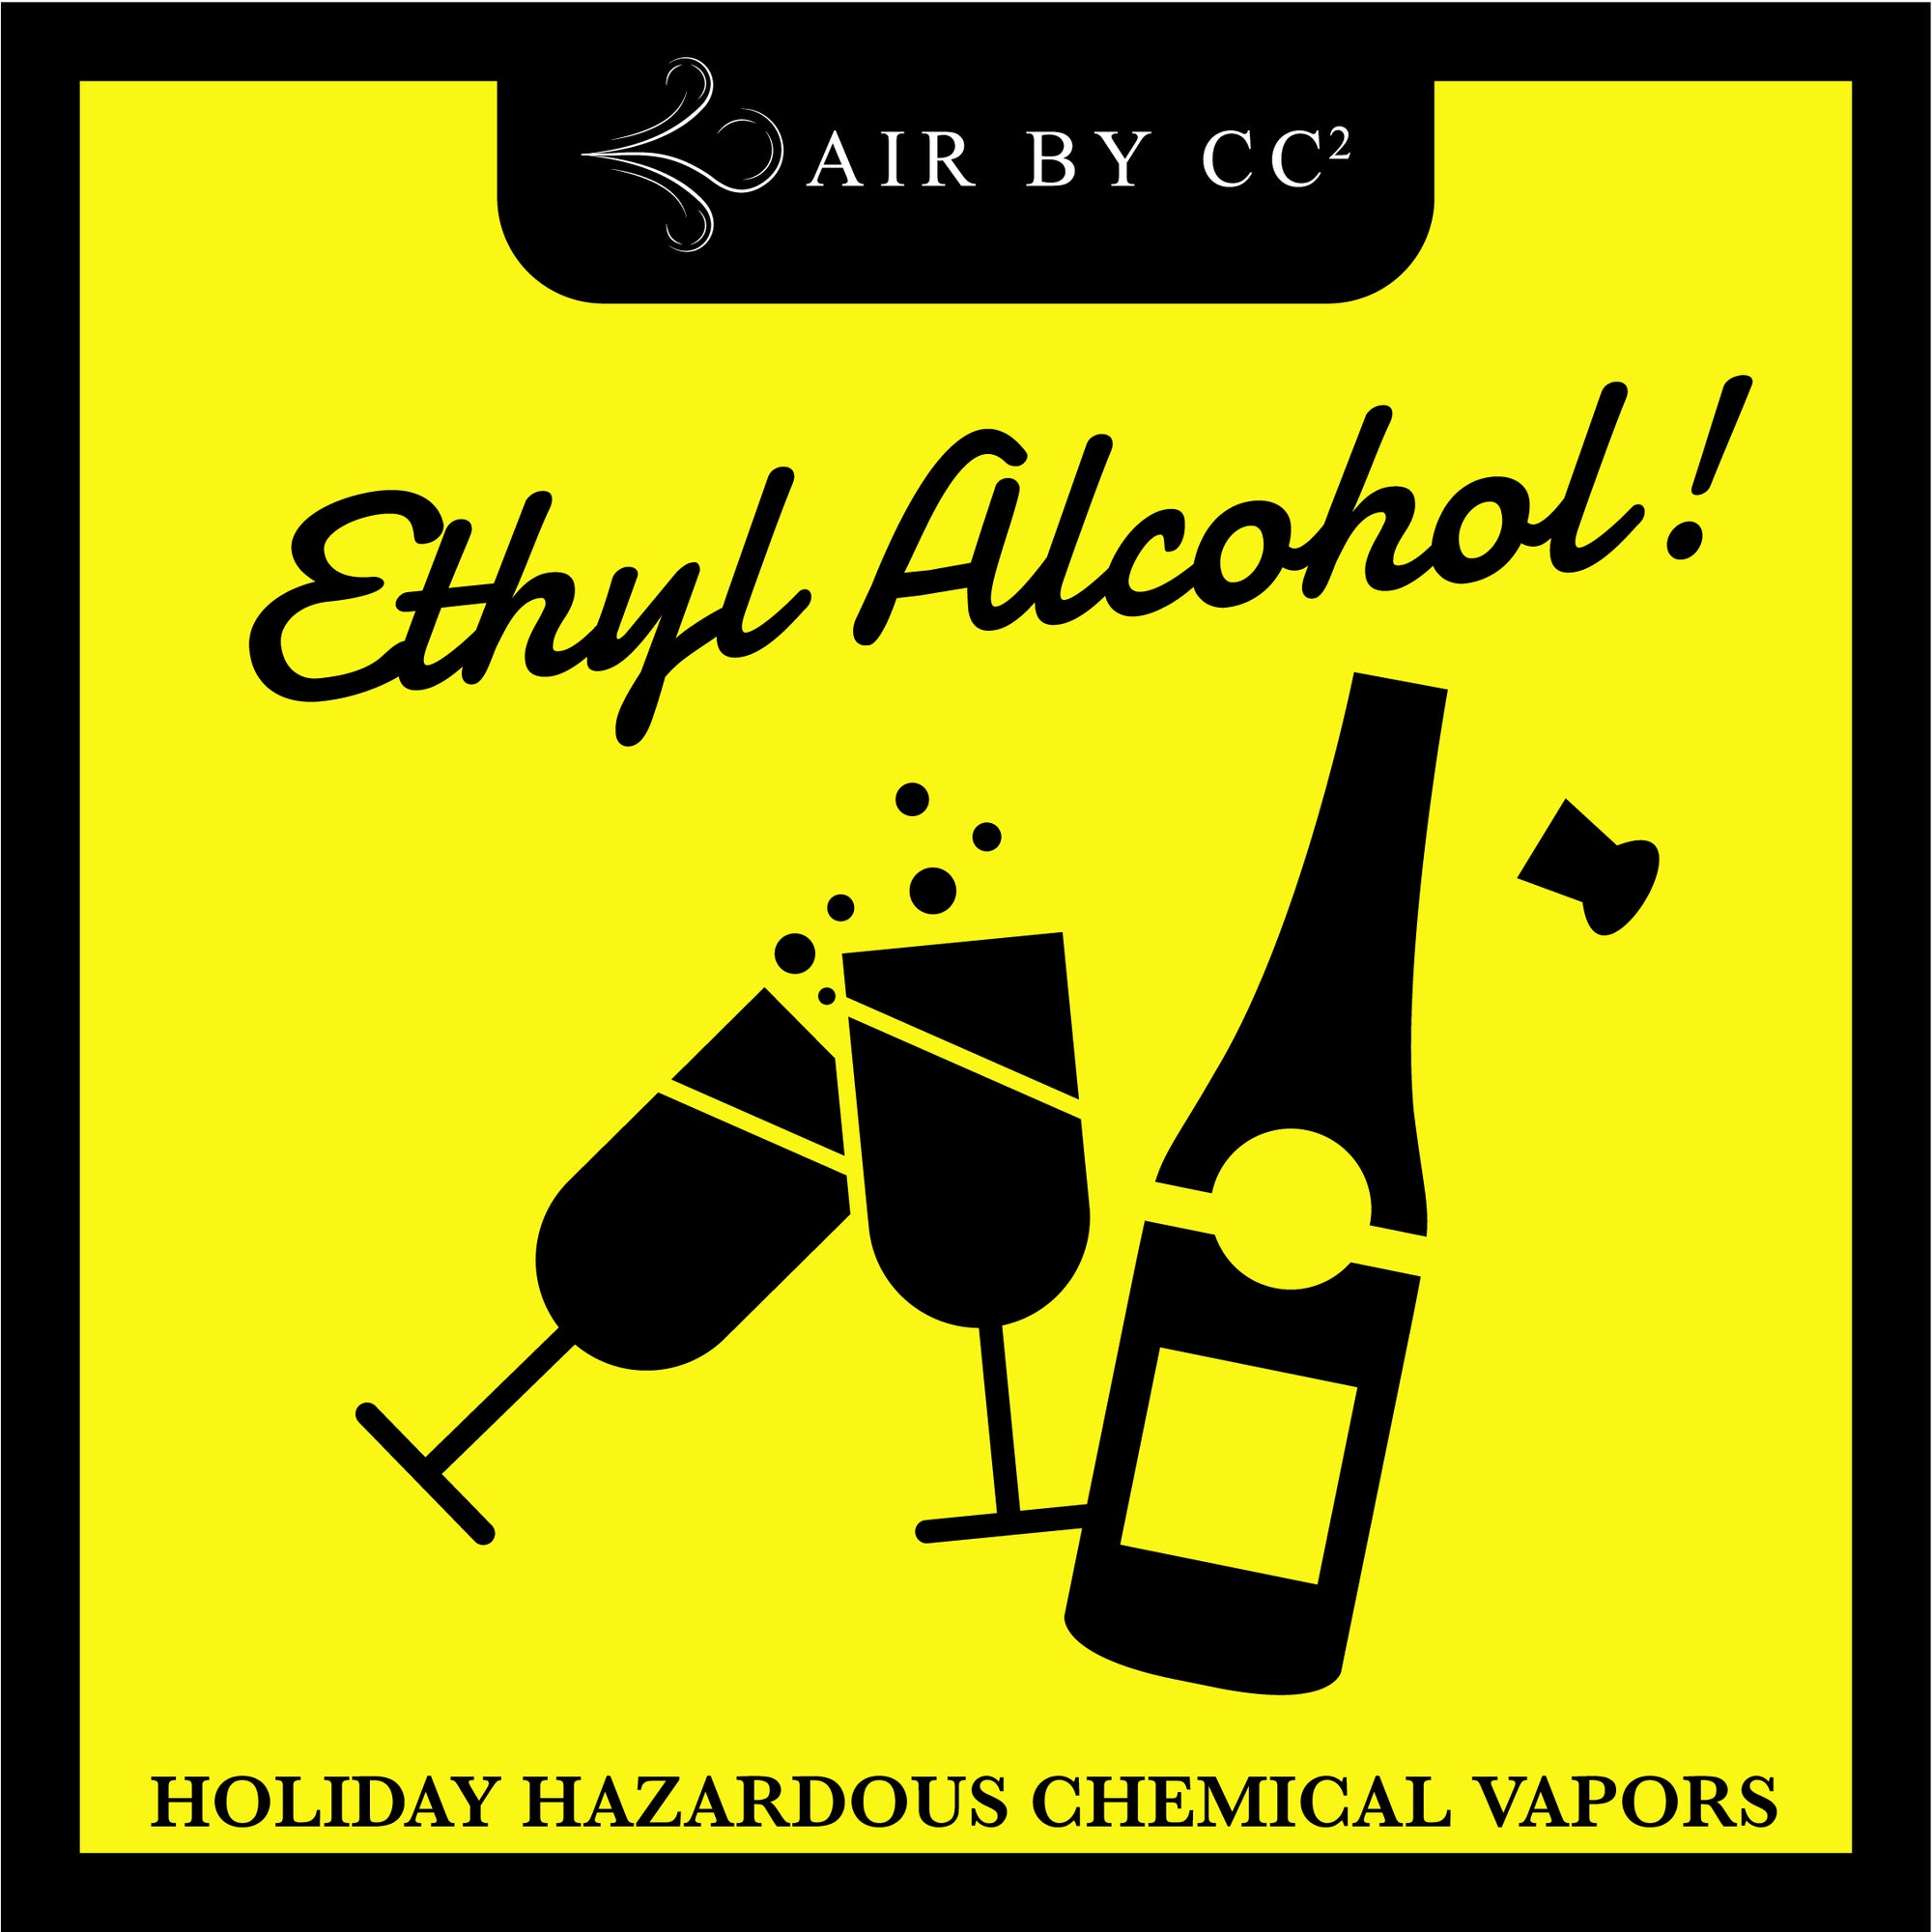 Today's Holiday Hazardous Vapor is Ethyl Alcohol